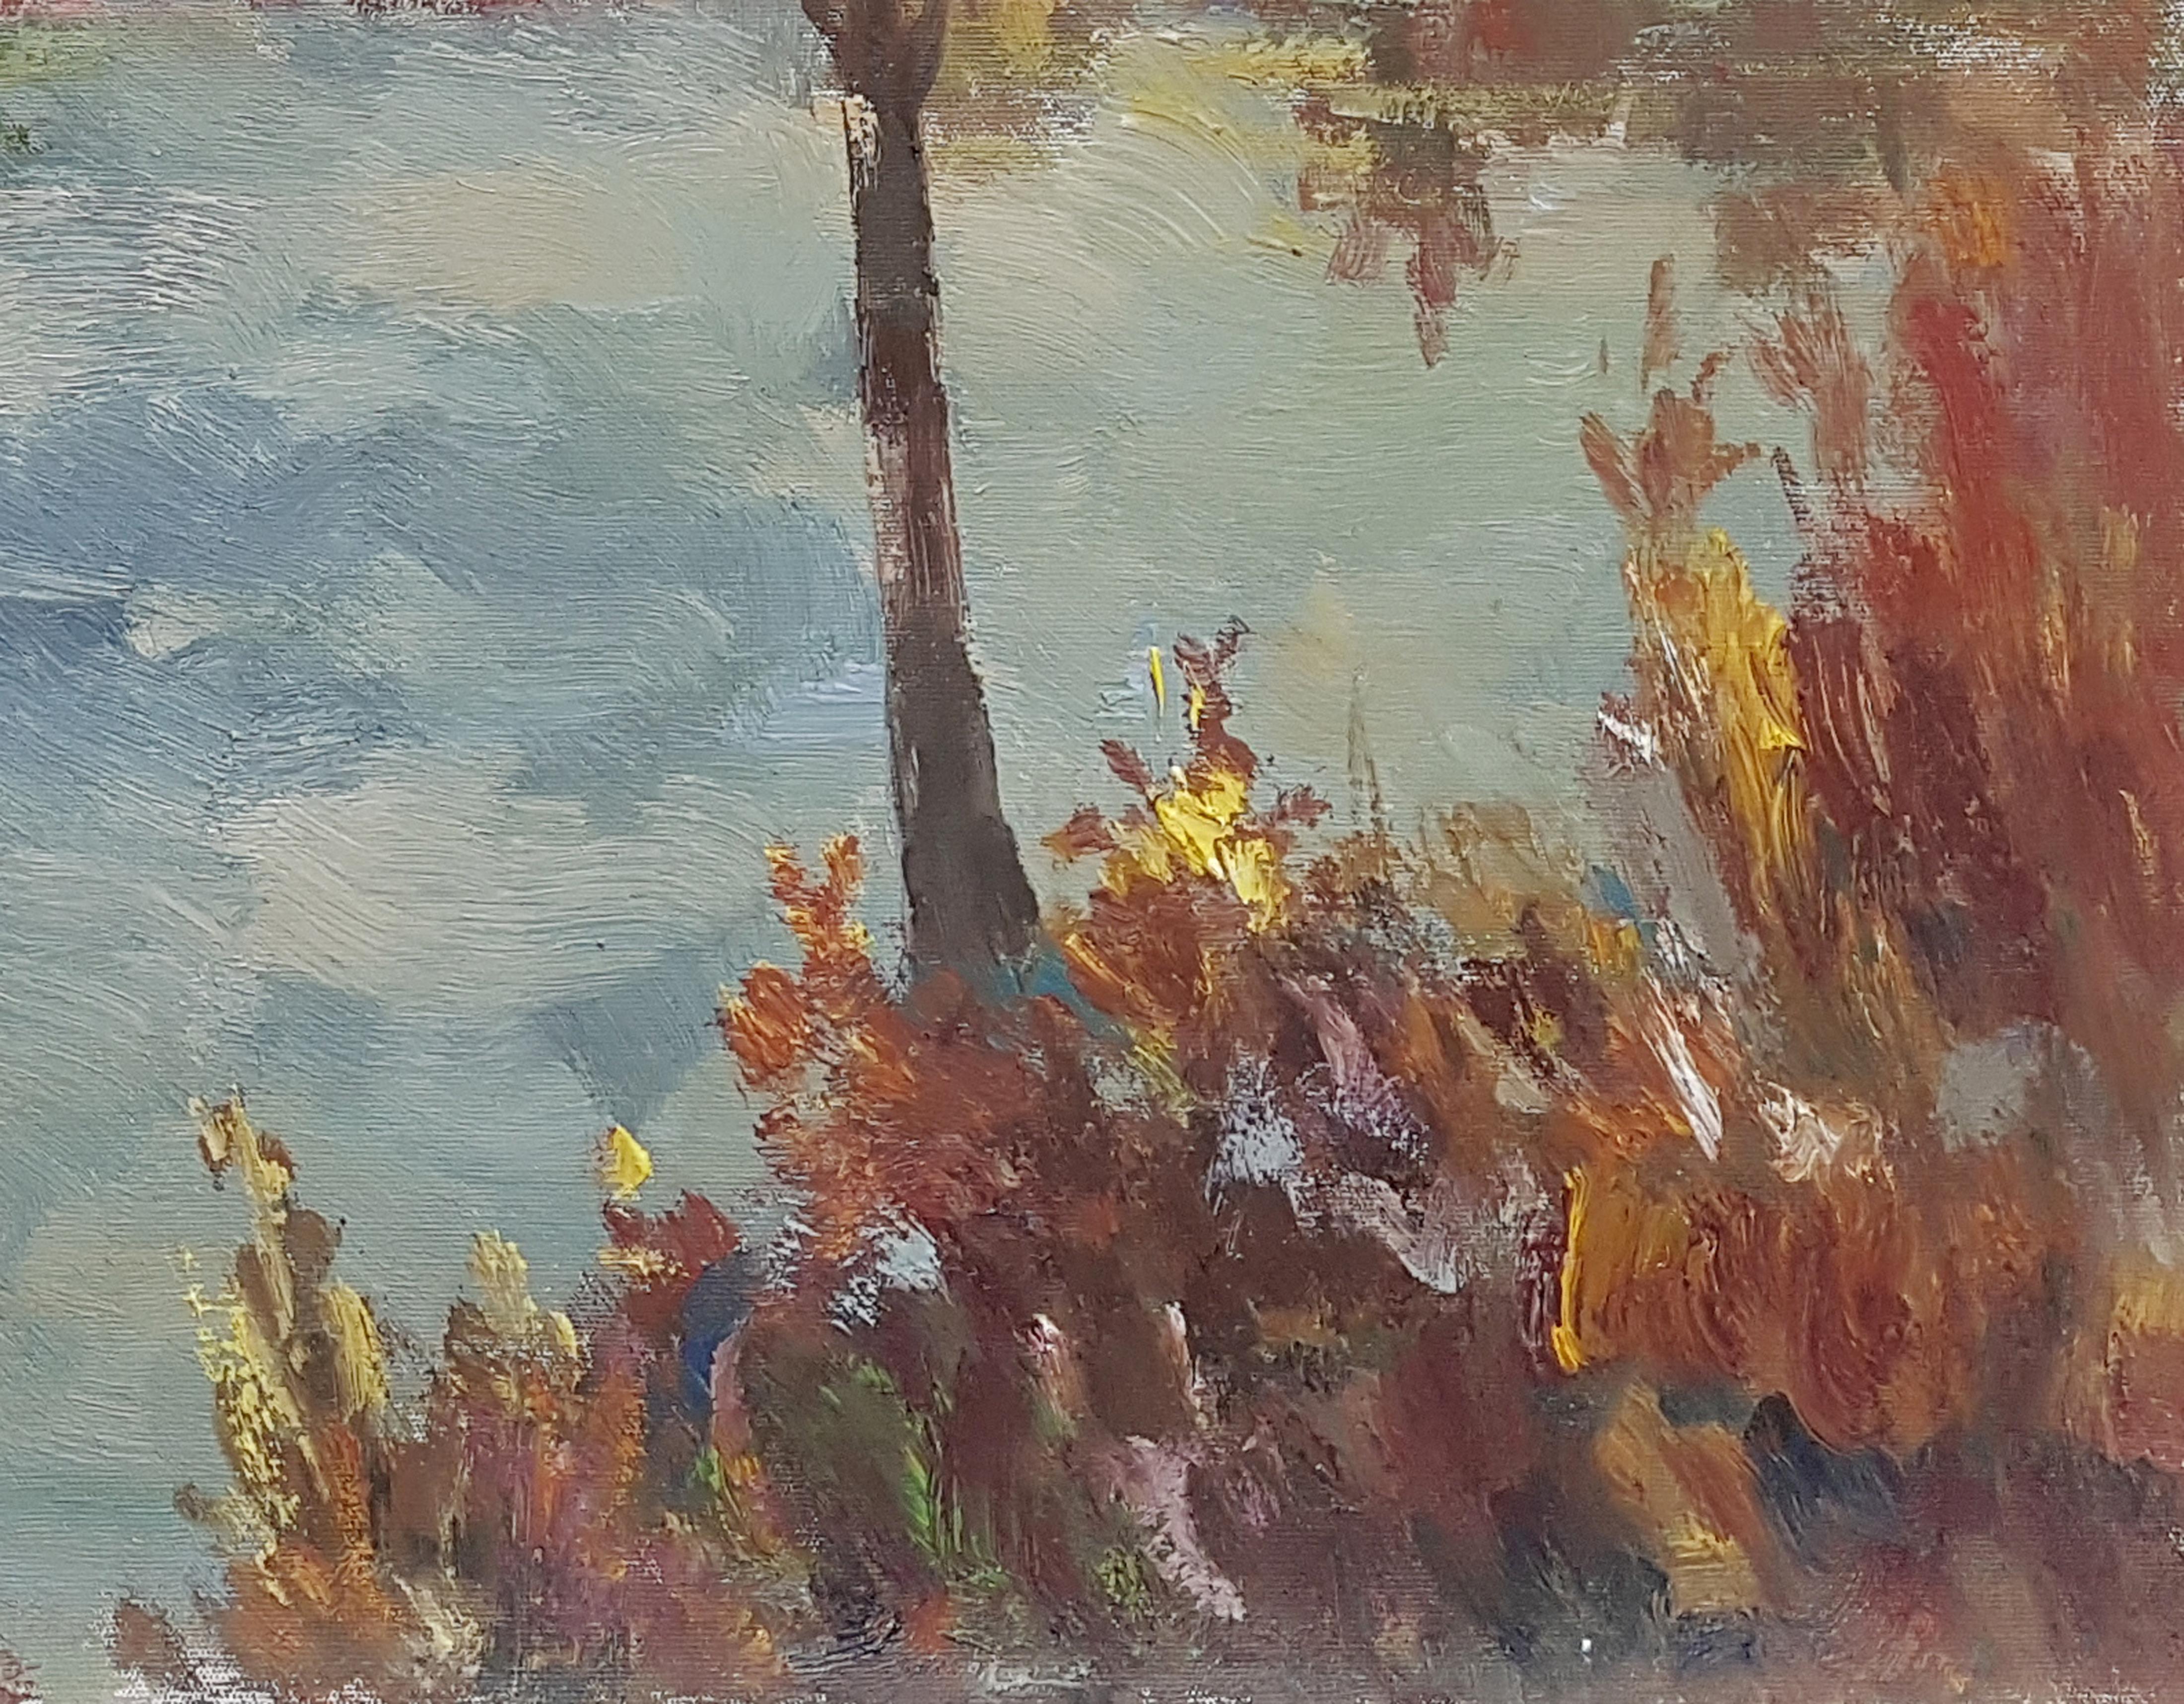 Artist: Ara H. Hakobyan
Work: Original Oil Painting, Handmade Artwork, One of a Kind
Medium: Oil on Canvas
Year: 2018
Style: Impressionism
Subject: Fall Landscape
Size: 24